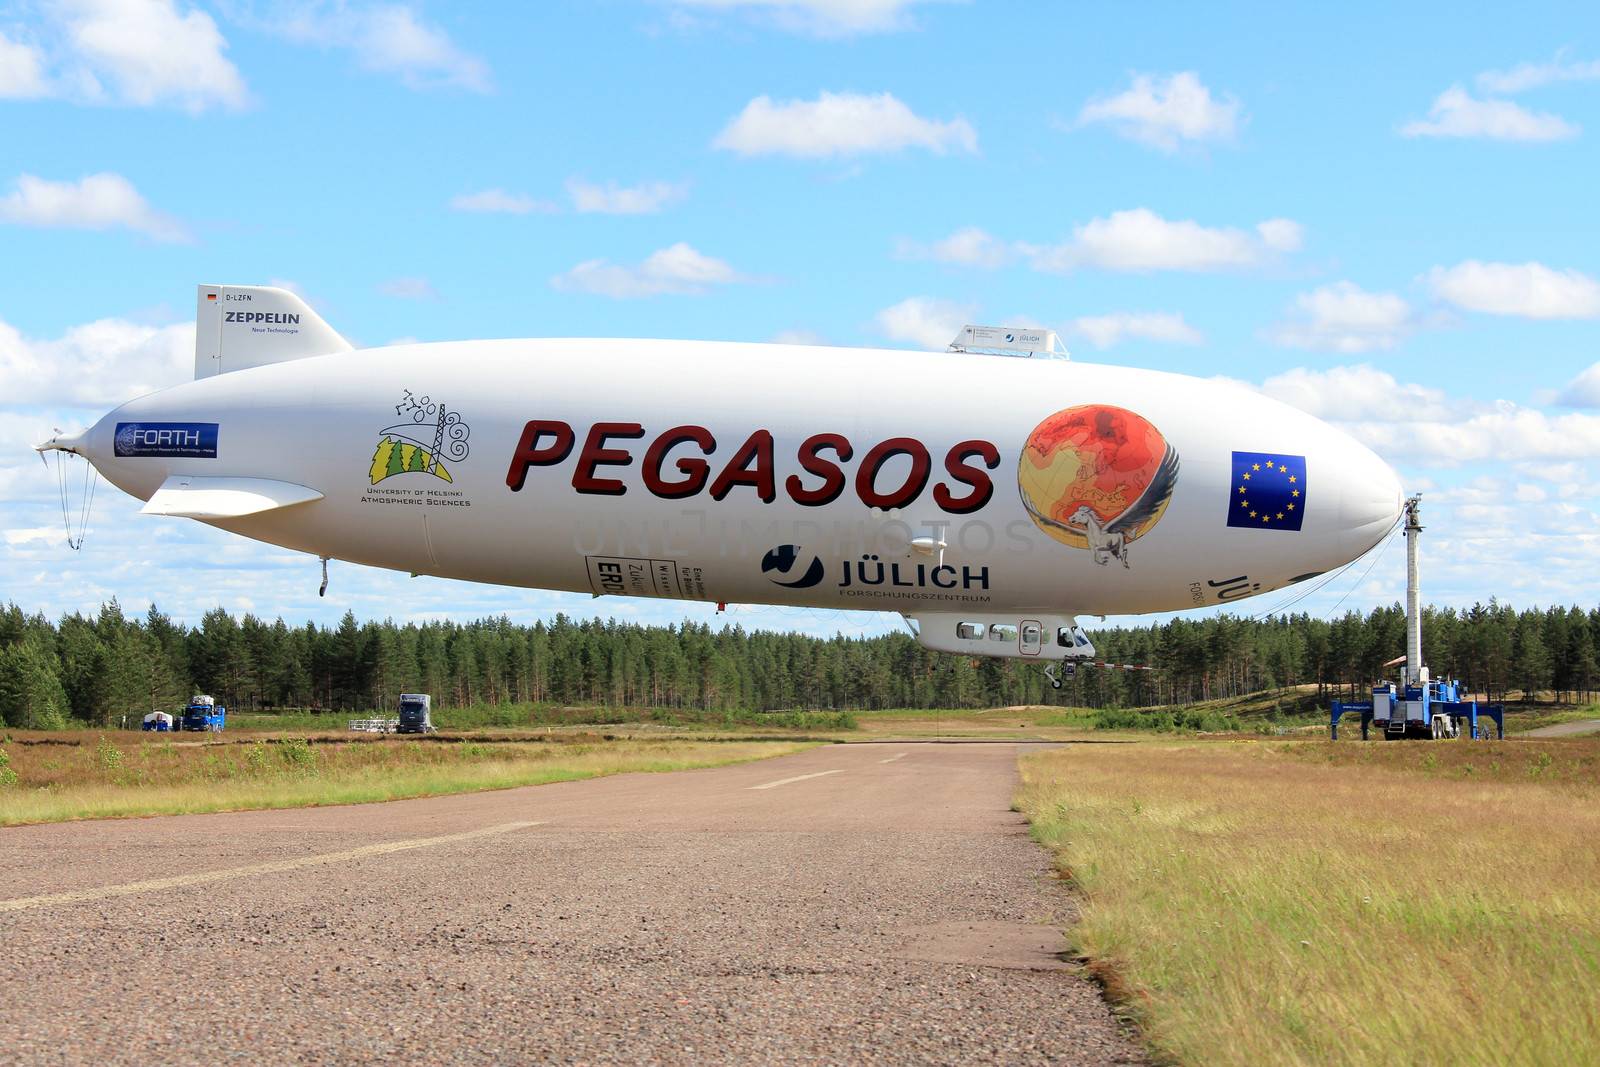 JAMIJARVI, FINLAND - JUNE 15, 2013: Pegasos Zeppelin NT airship in Jamijarvi, Finland on June 15, 2013 after the ca. 30 research flights as part of the European PEGASOS project.